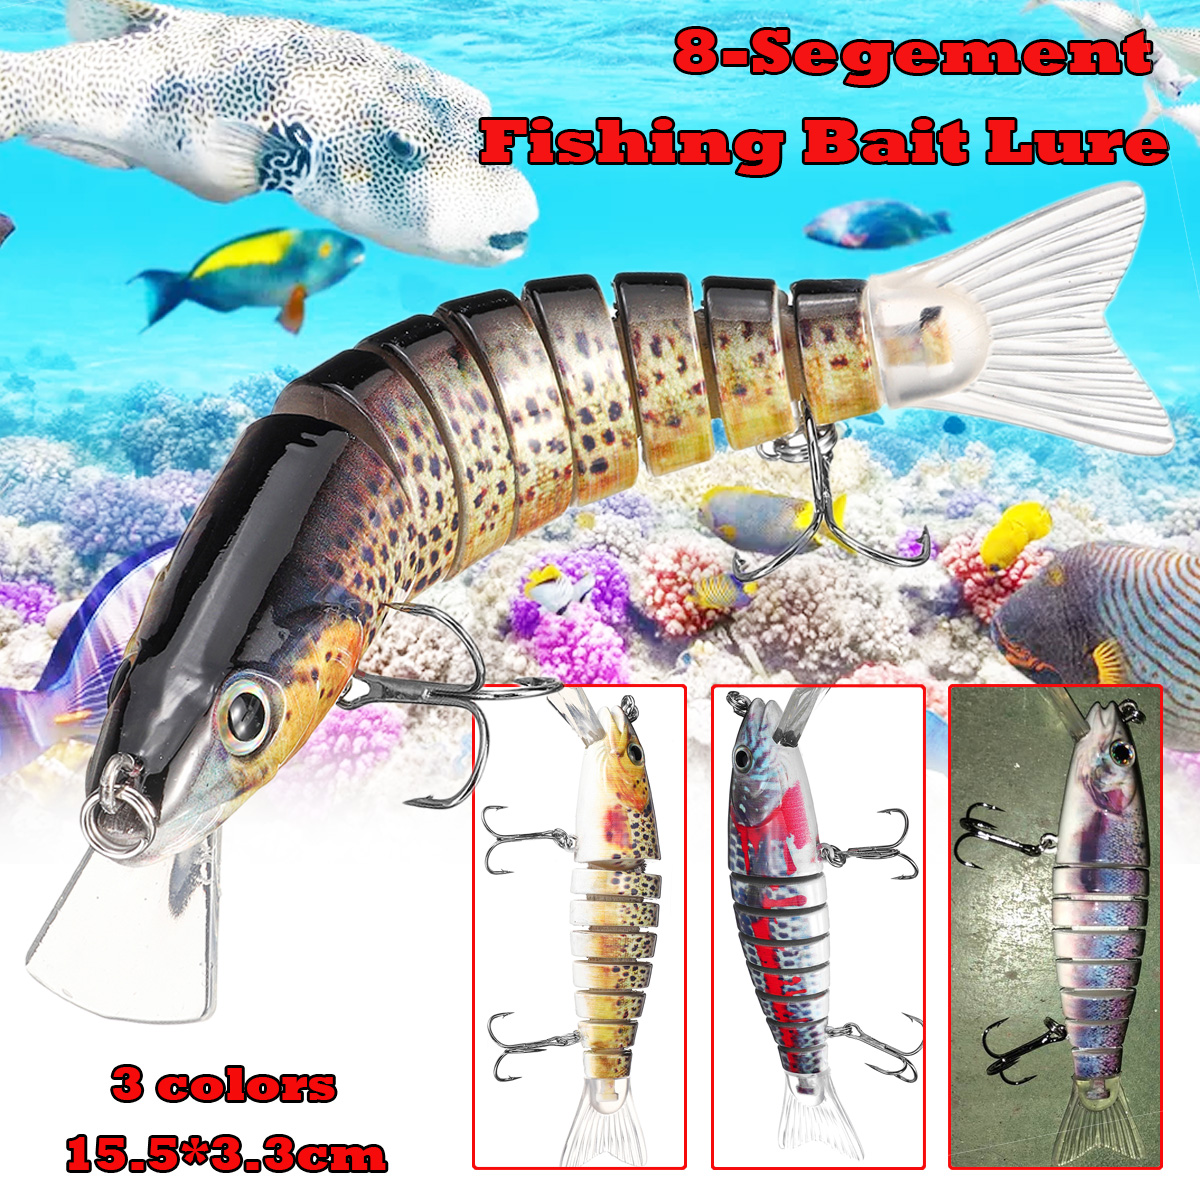 ZANLURE-155cm-Fishing-Lure-8-Segement-Pike-Lure-With-Mouth-Swim-bait-Fishing-Bait-1598243-1